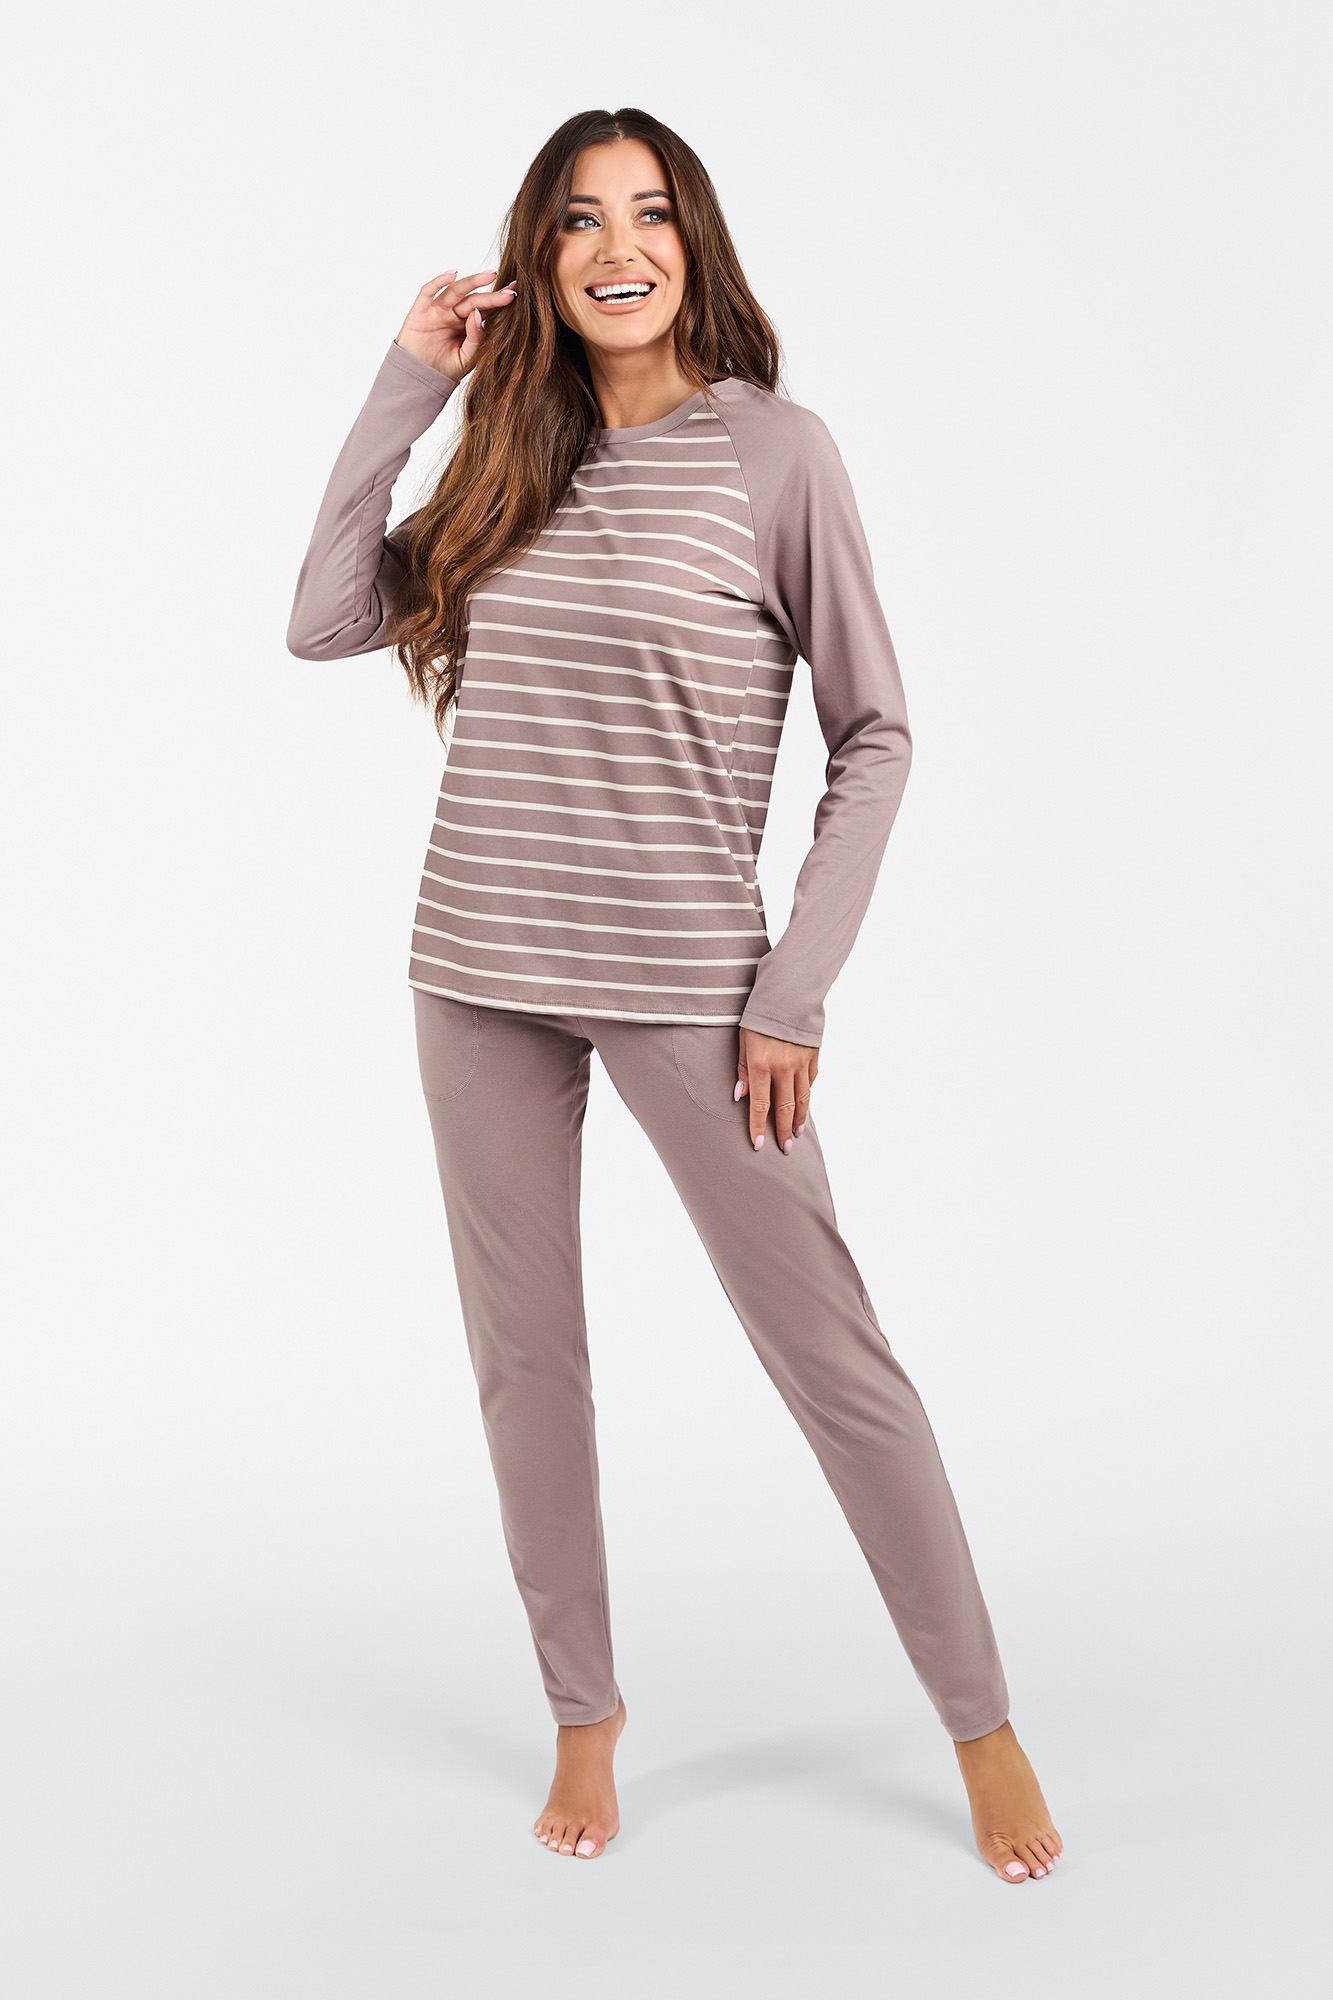 Women's pajamas Oda long sleeves, long pants - cappuccino/cappuccino print